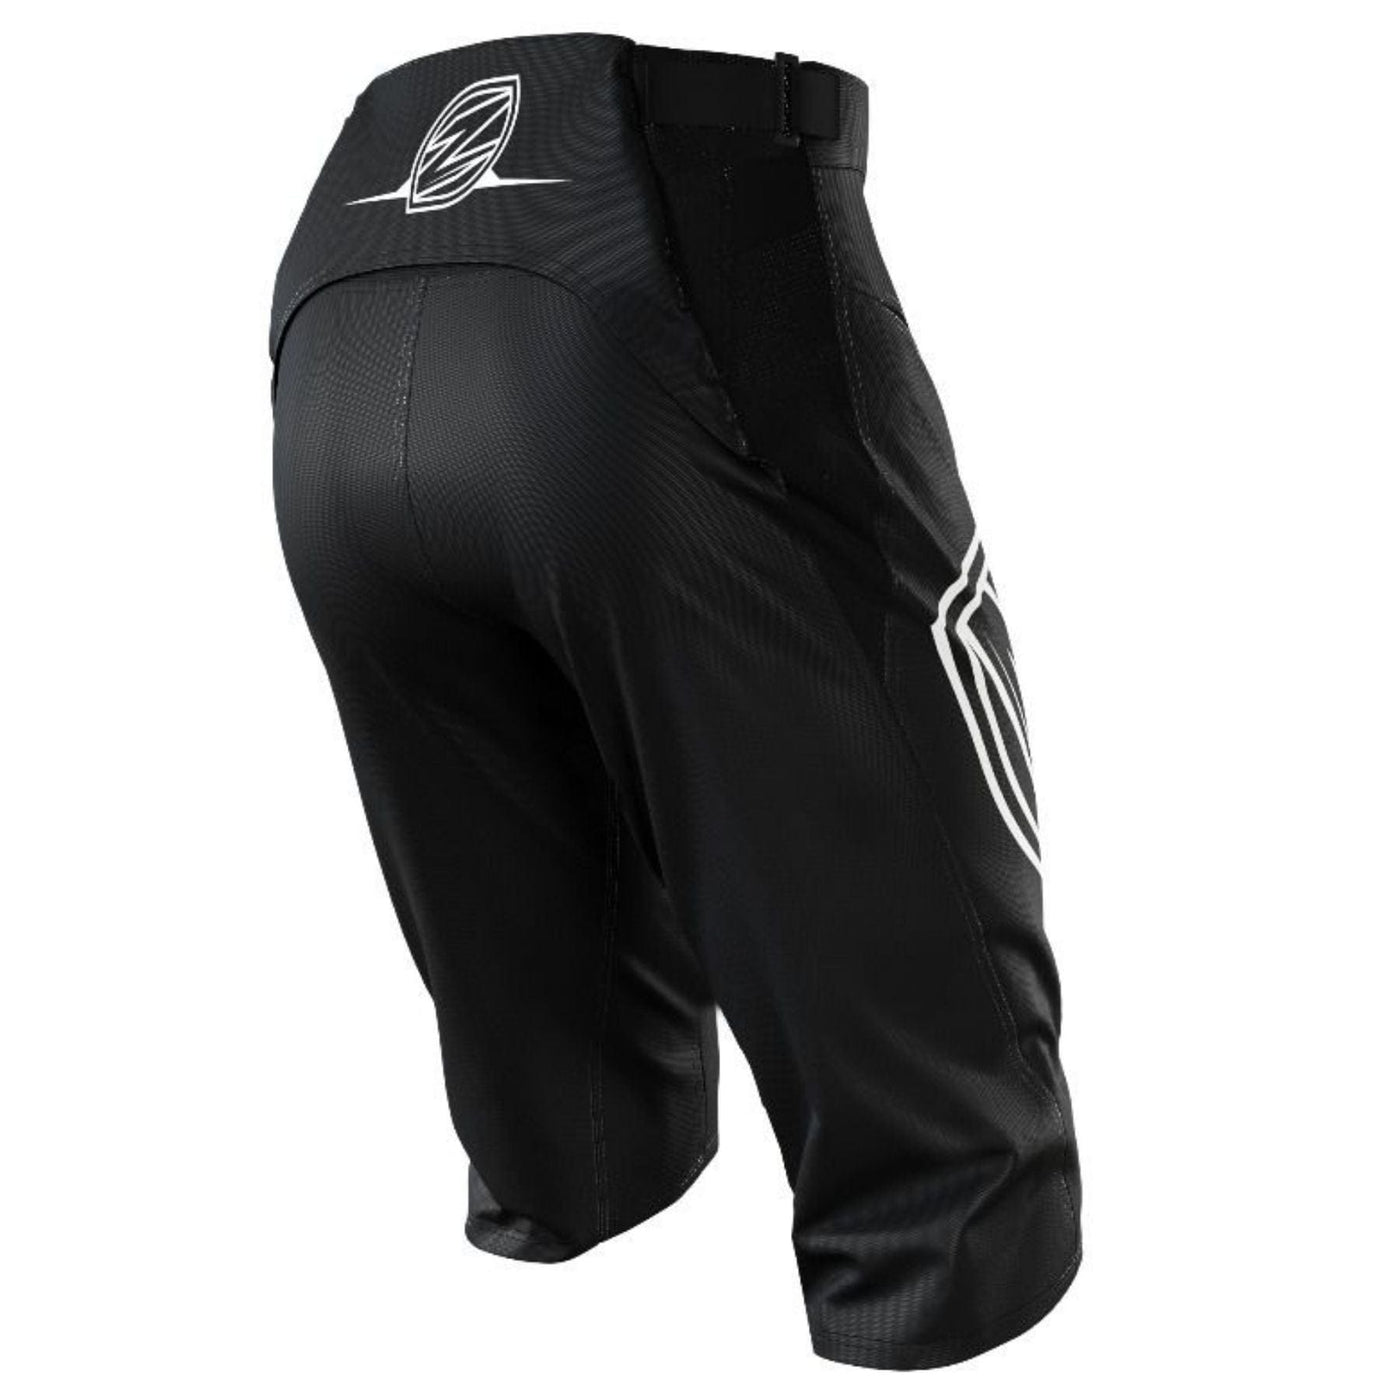 ZULU Youth Shorts Shield - Black/White With Pocket